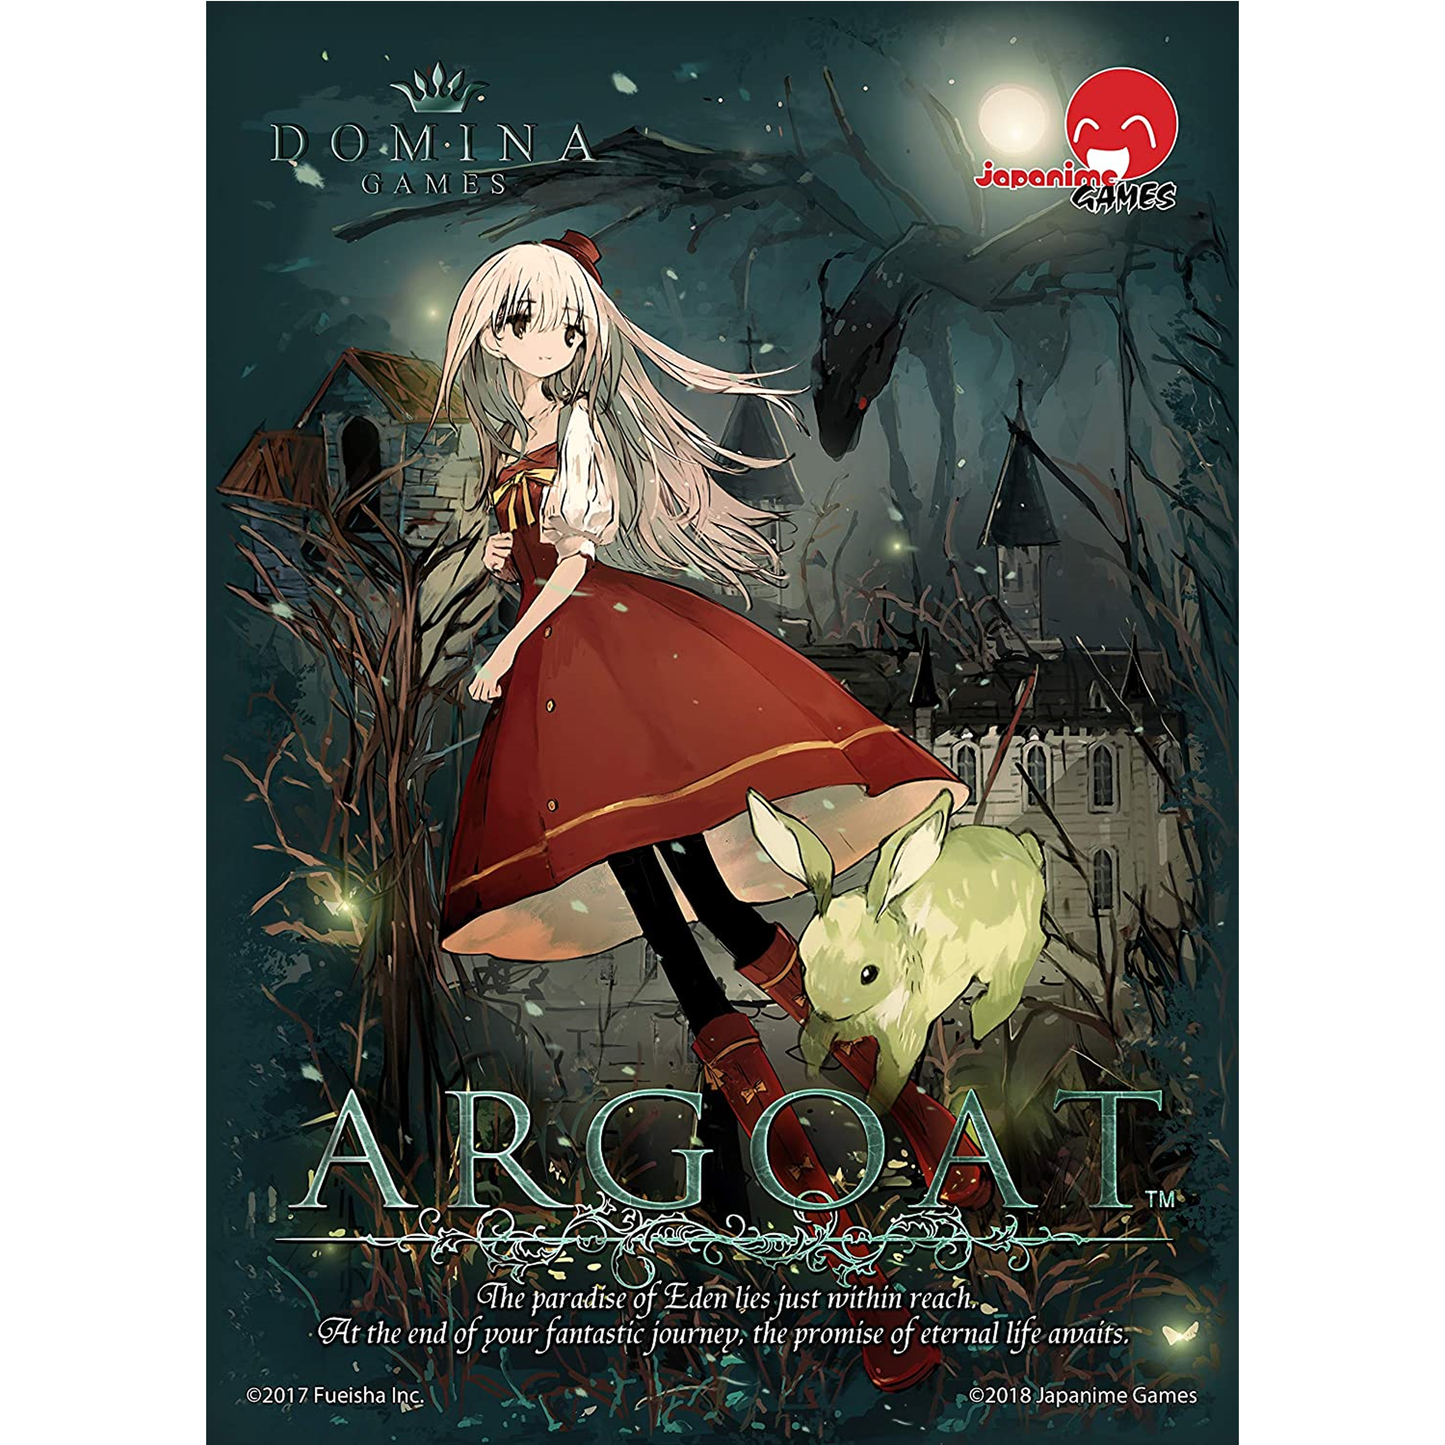 Argoat - Card game